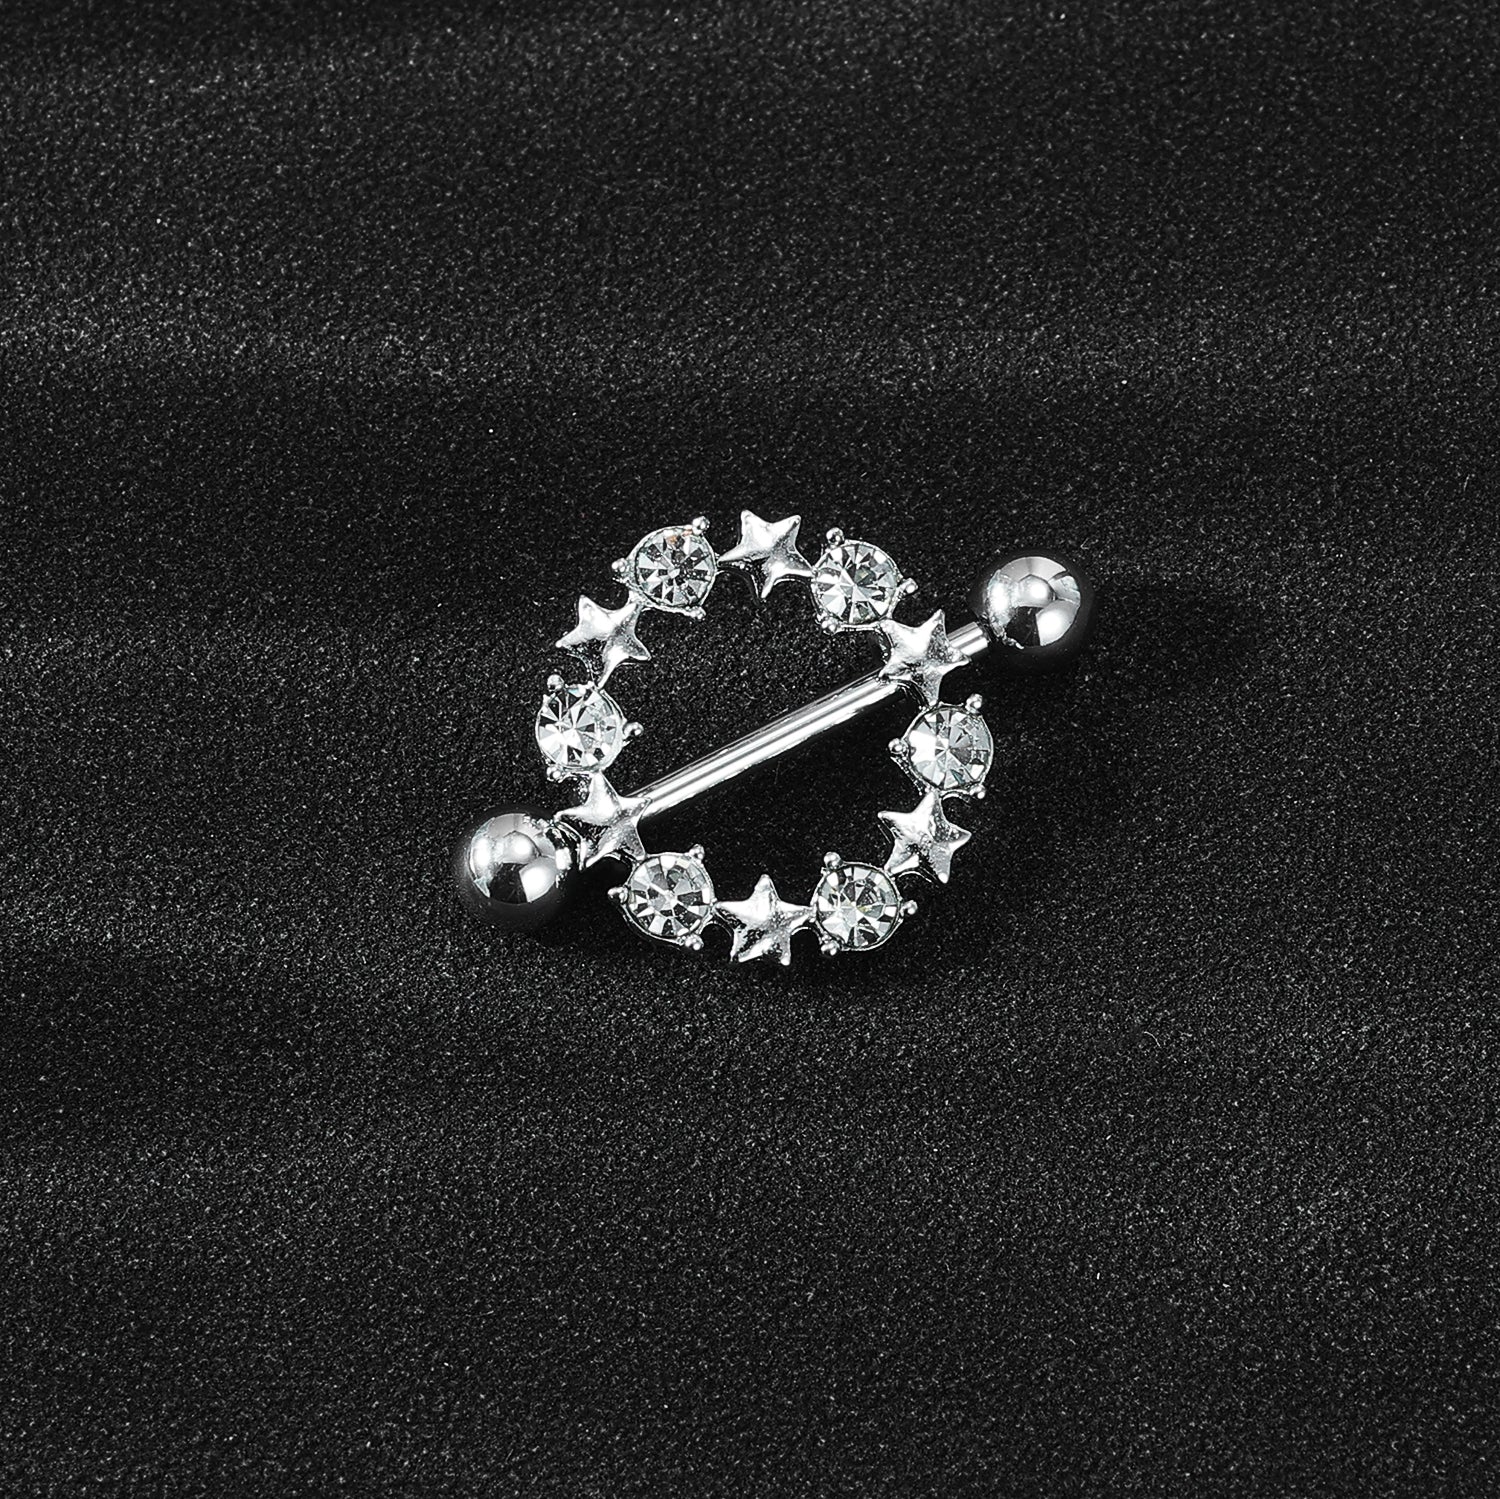 2Pcs 14G Star Nipple Rings Bling Crystal Nipple Piercing Barbell Jewelry